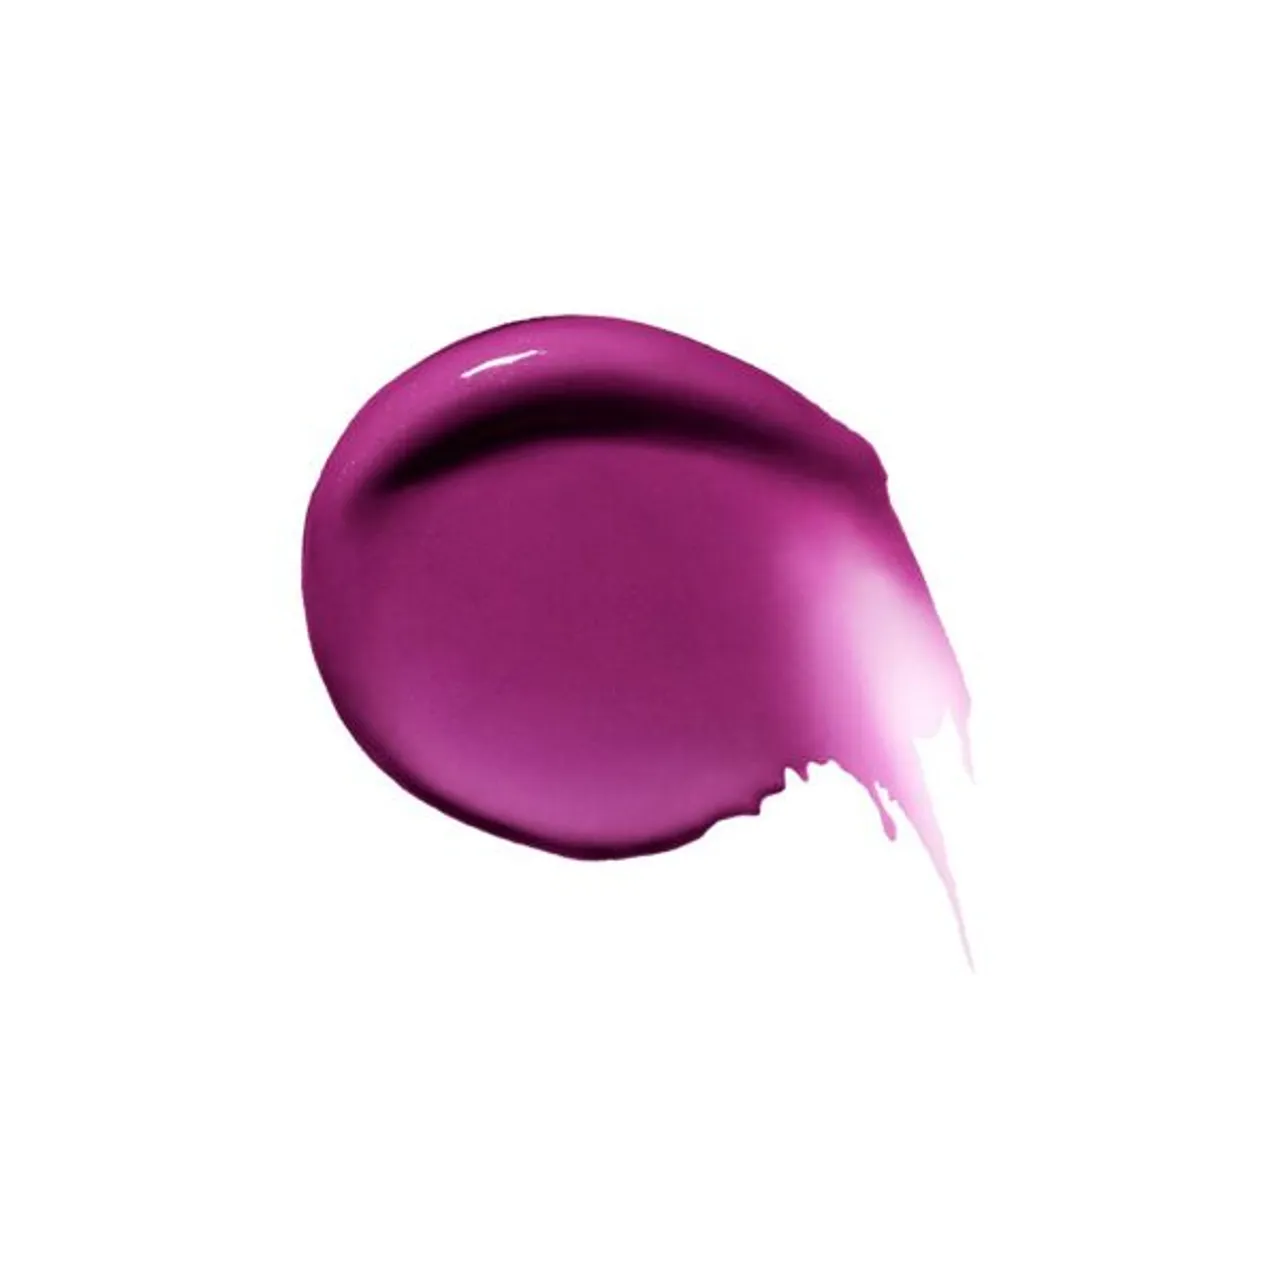 Shiseido Colorgel Lipbalm - 09 Wisteria - Unisex